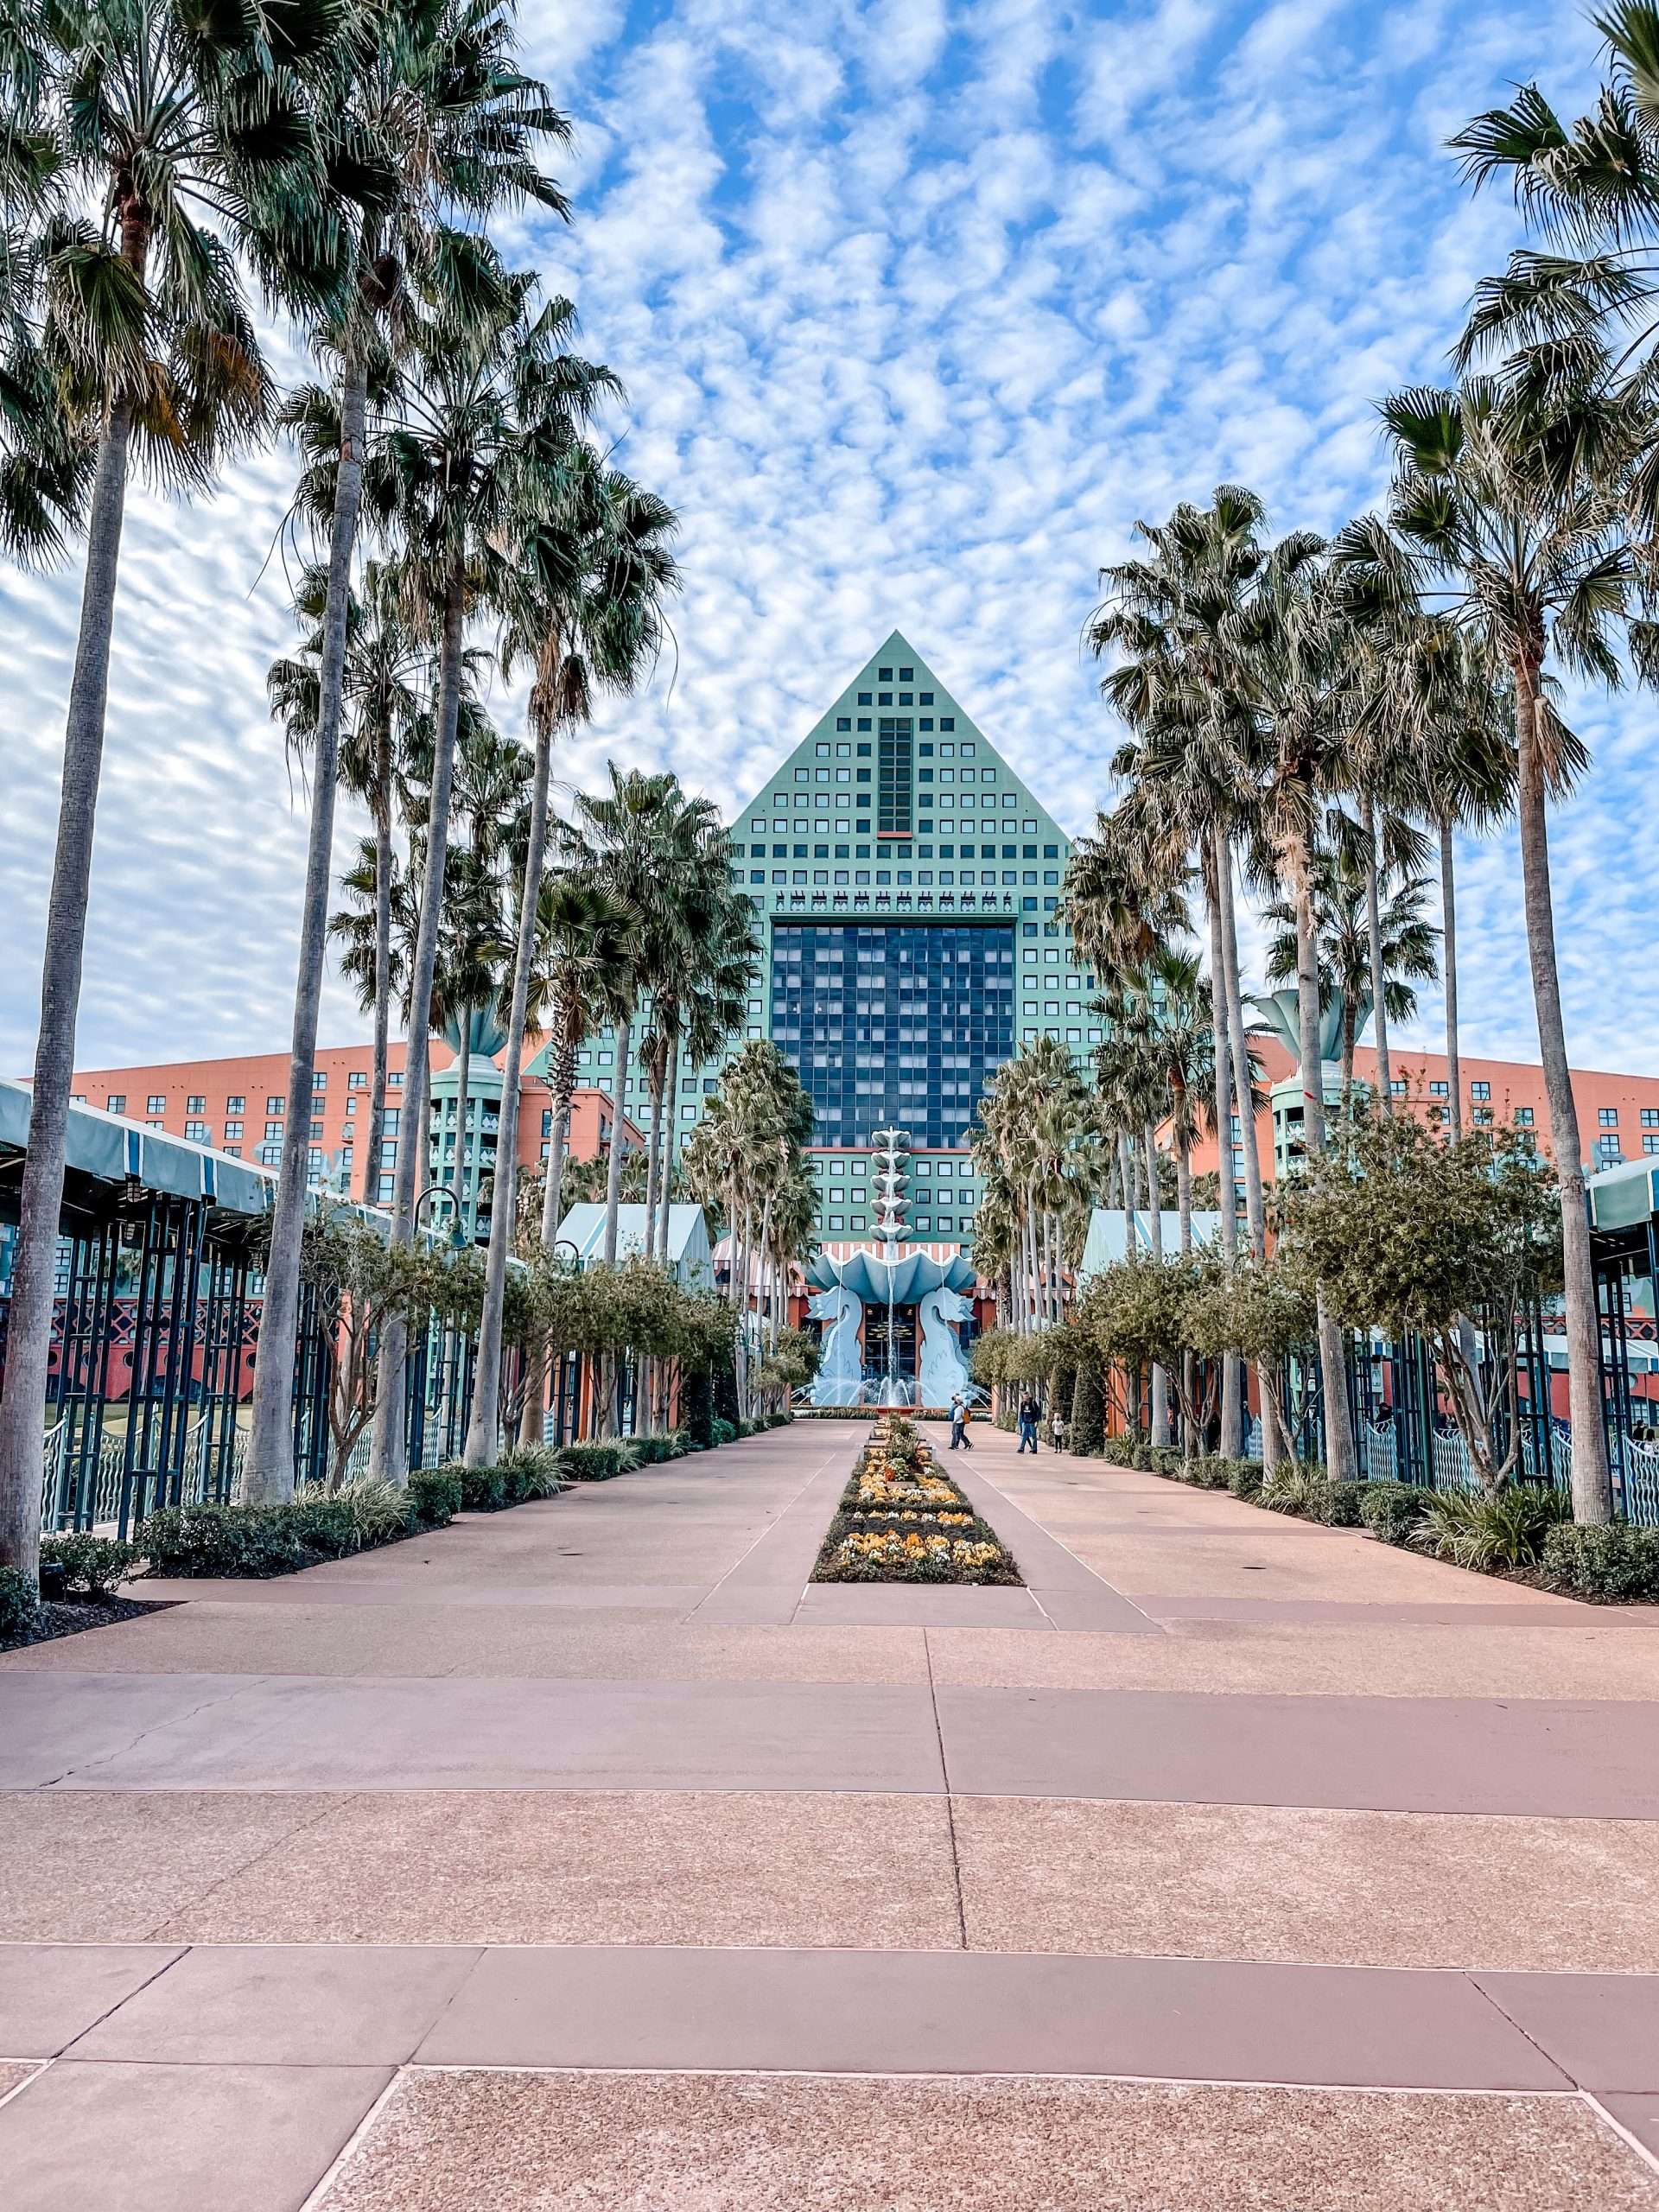 Walt Disney World Dolphin Hotel: A Disney Resort Review